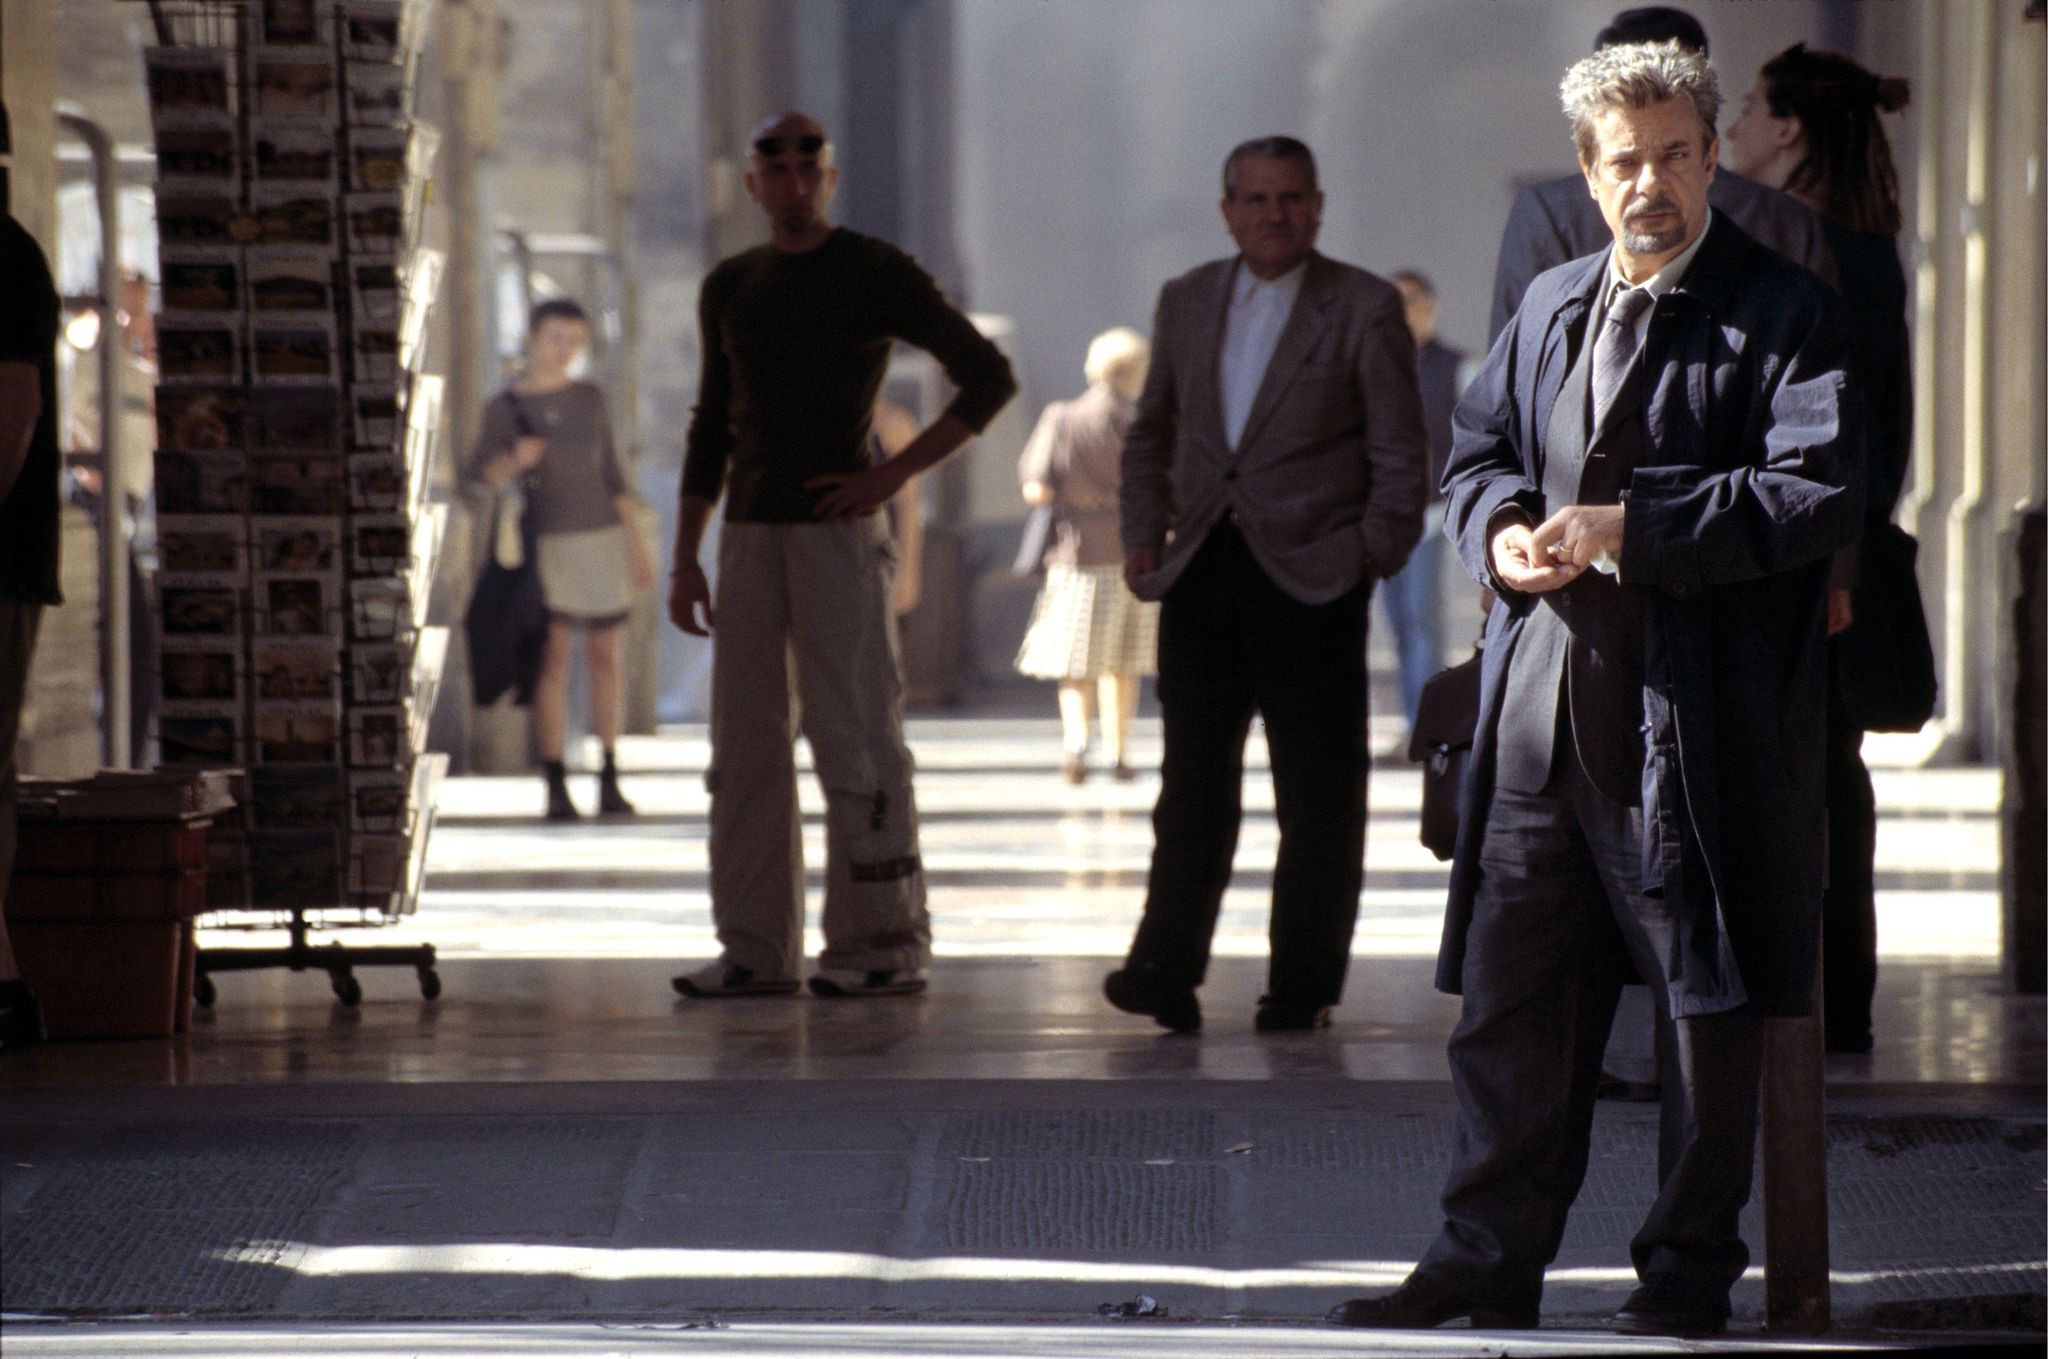 Still of Giancarlo Giannini in Hannibal (2001)